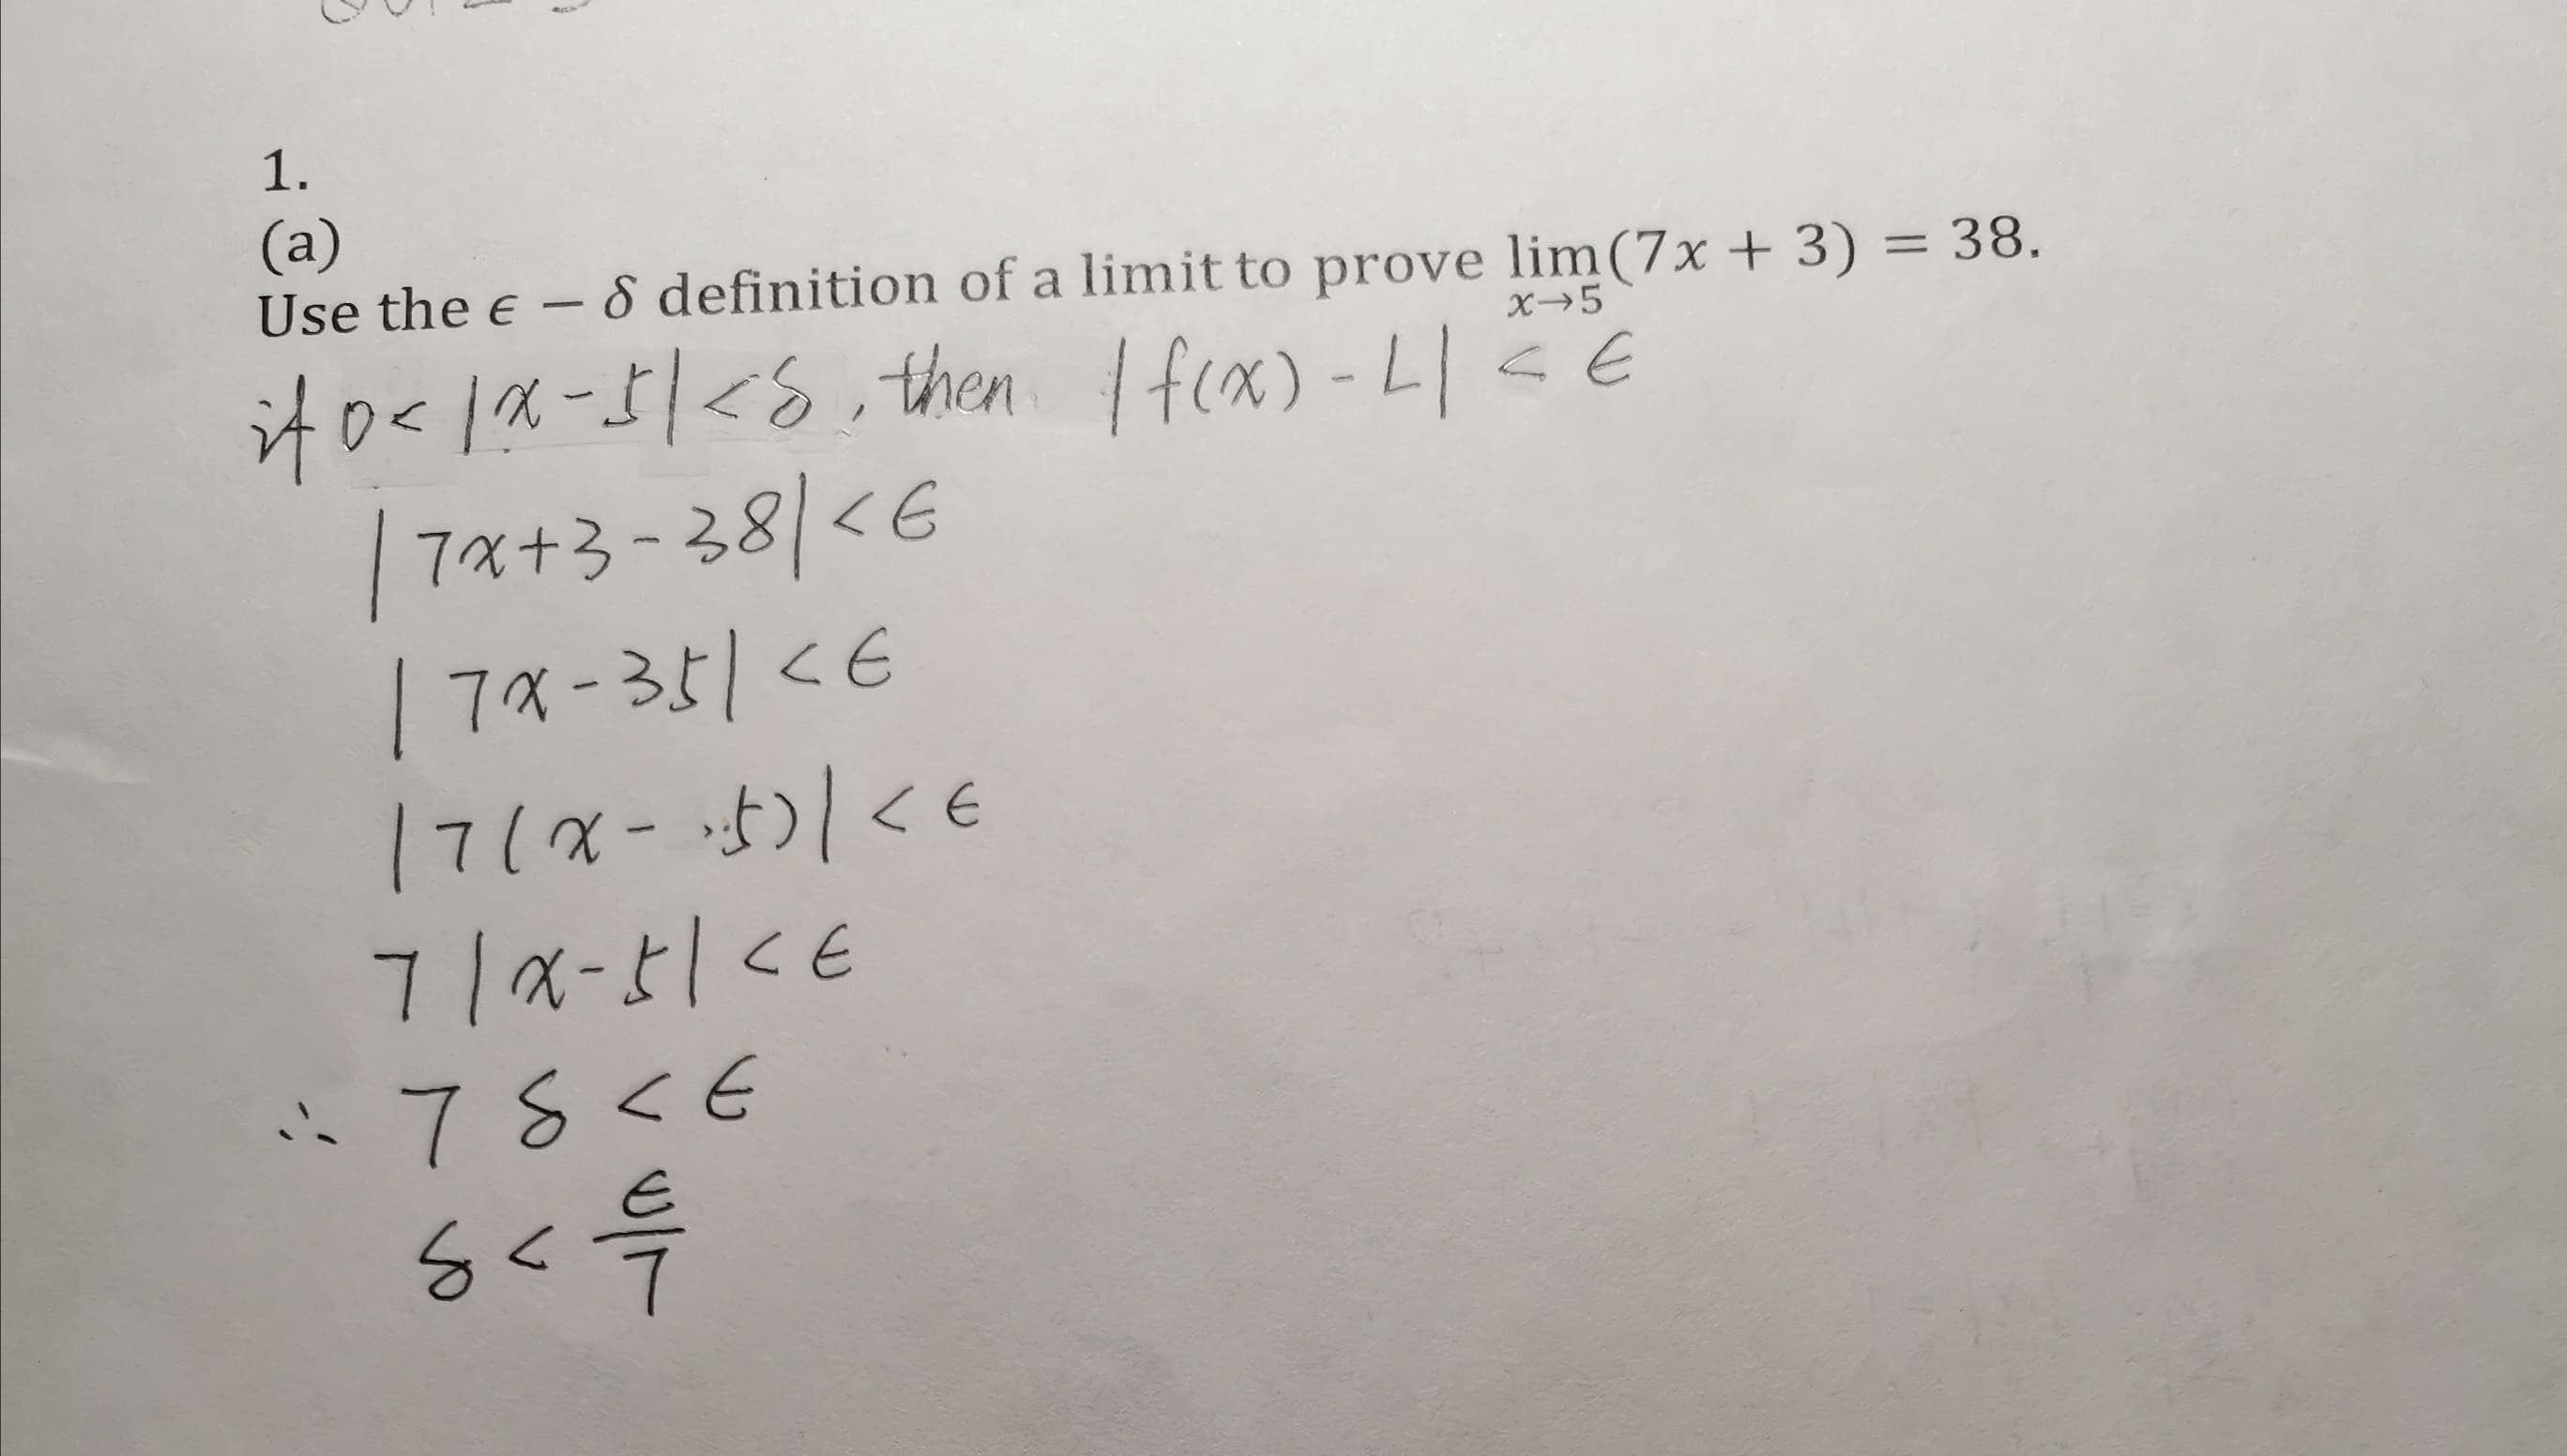 1.
(a)
Use the e - 8 definition of a limit to prove lim(7x + 3) = 38.
X5
t010-1123.then fex)-LI
7+3-286
|74-301<6
17/2-140106
7/a-t16
. 7S<E
<E
